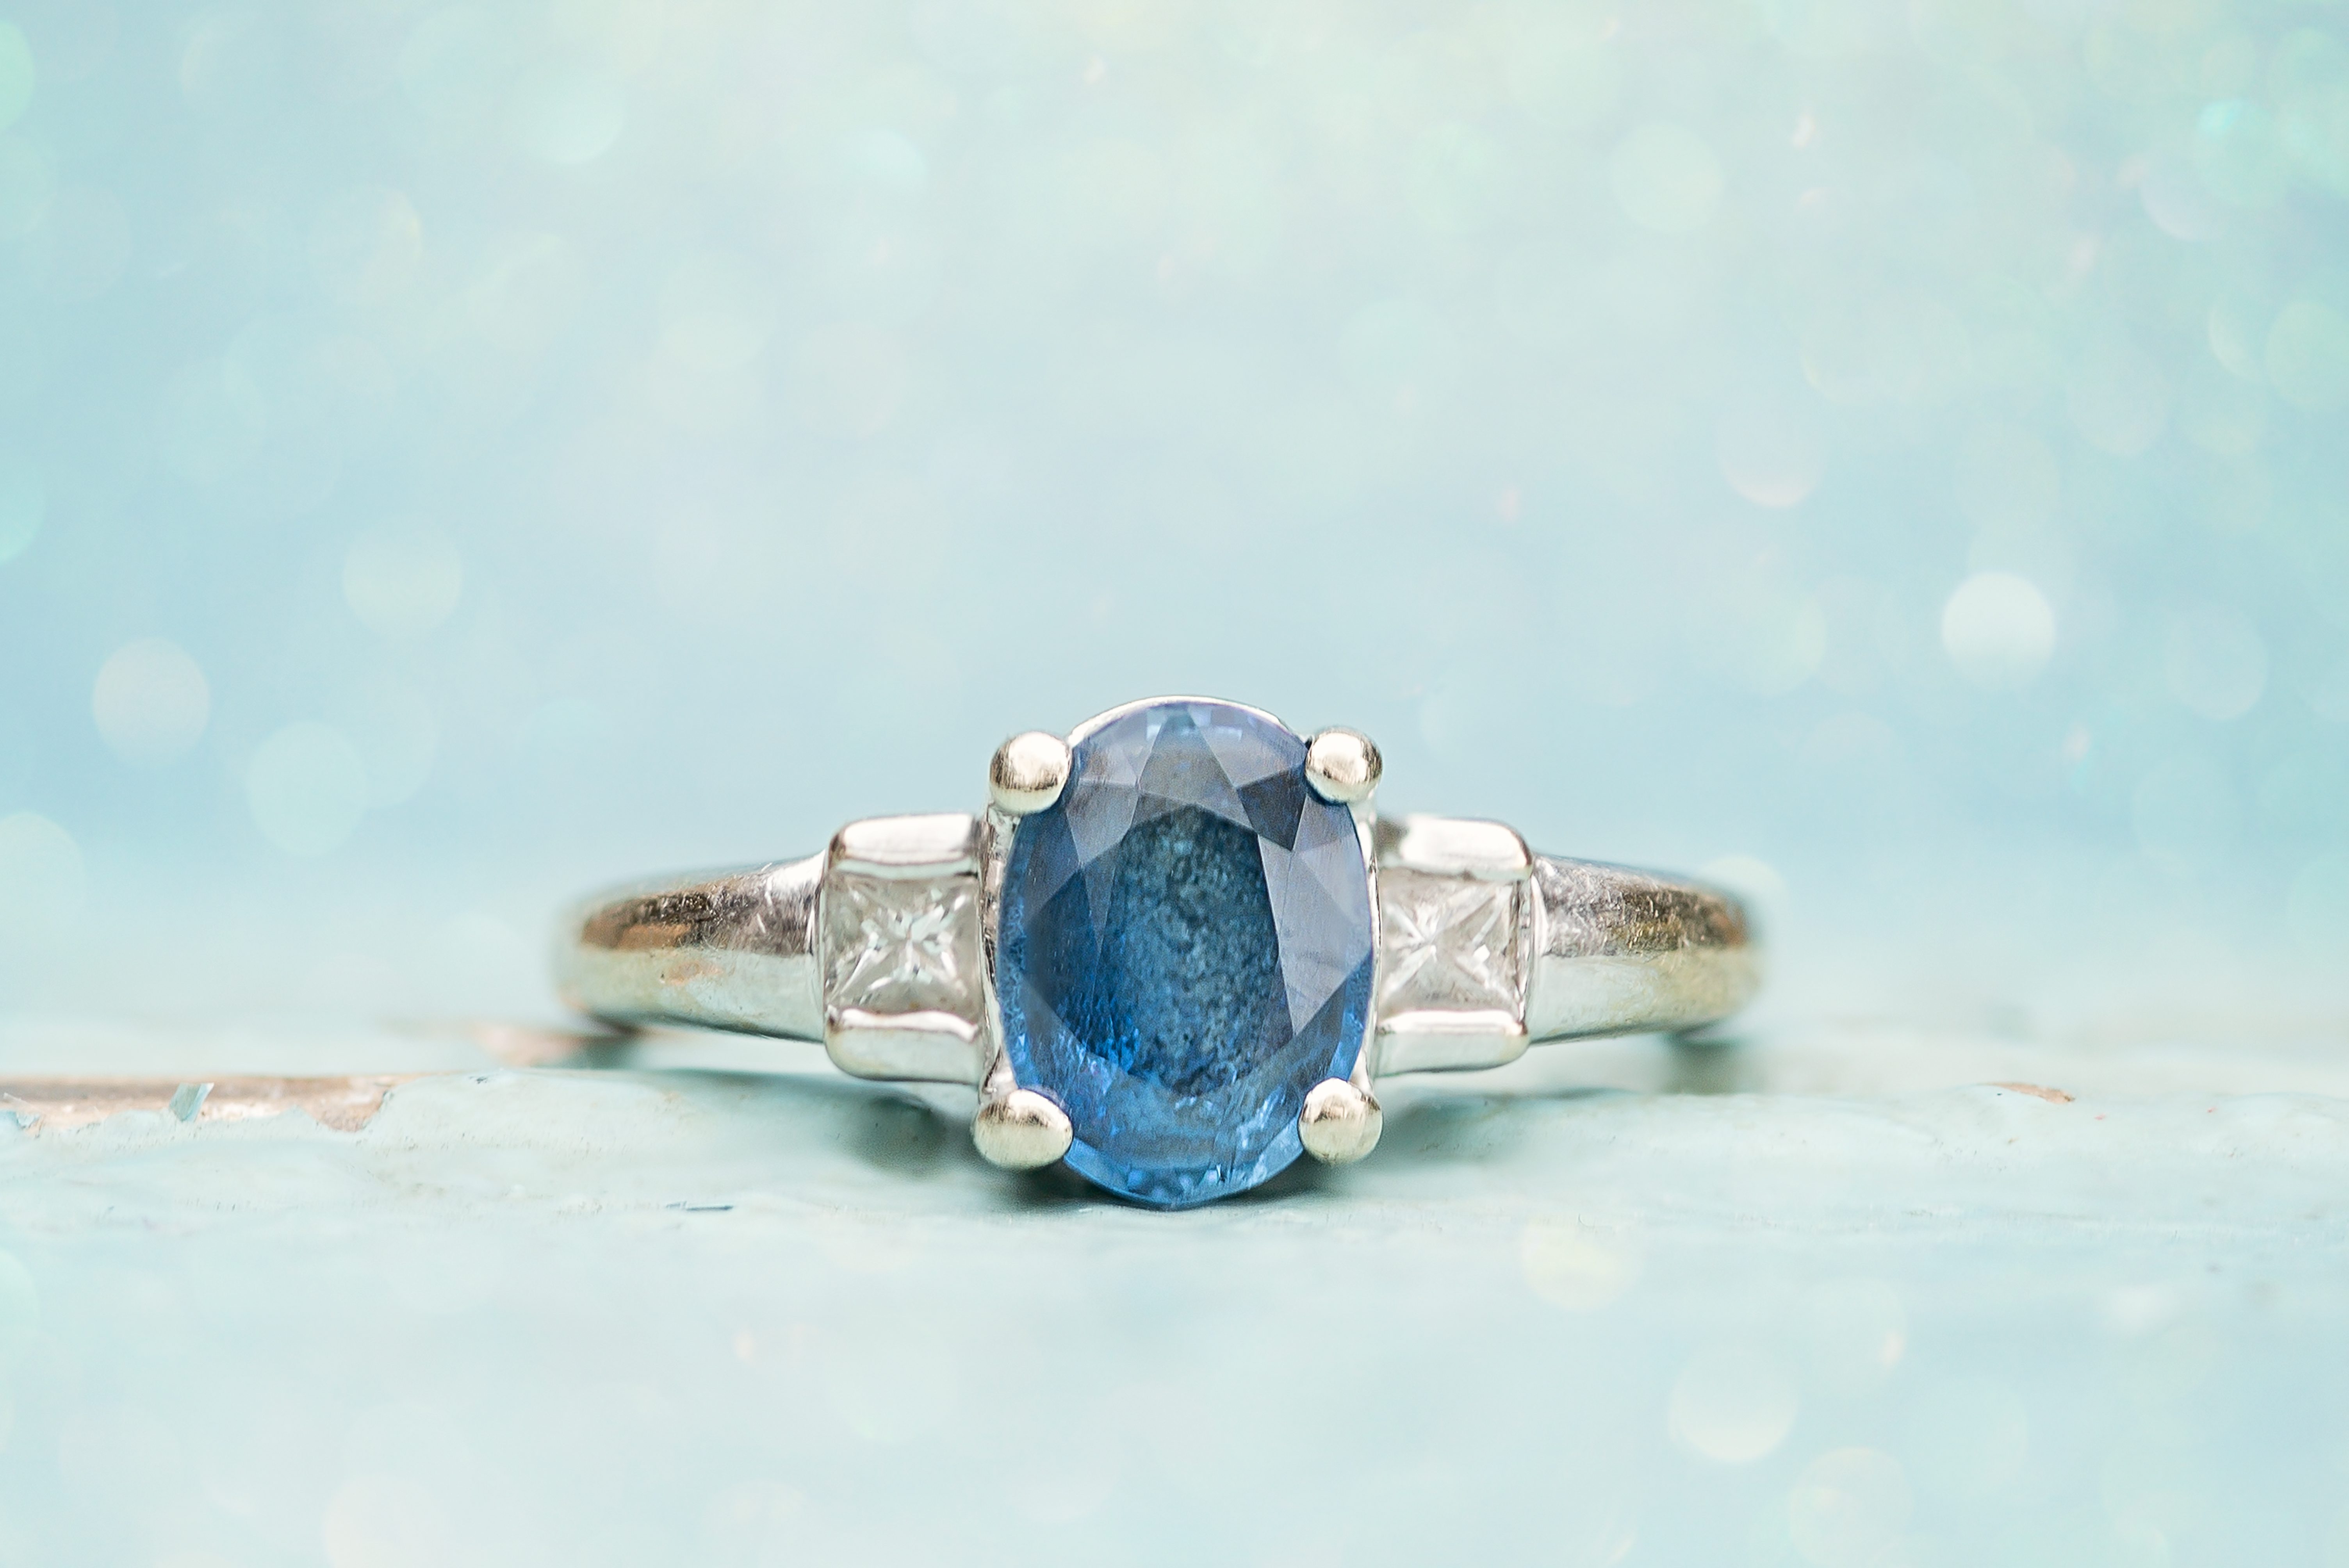 New Braunfels macro jewelry ring blue photographer